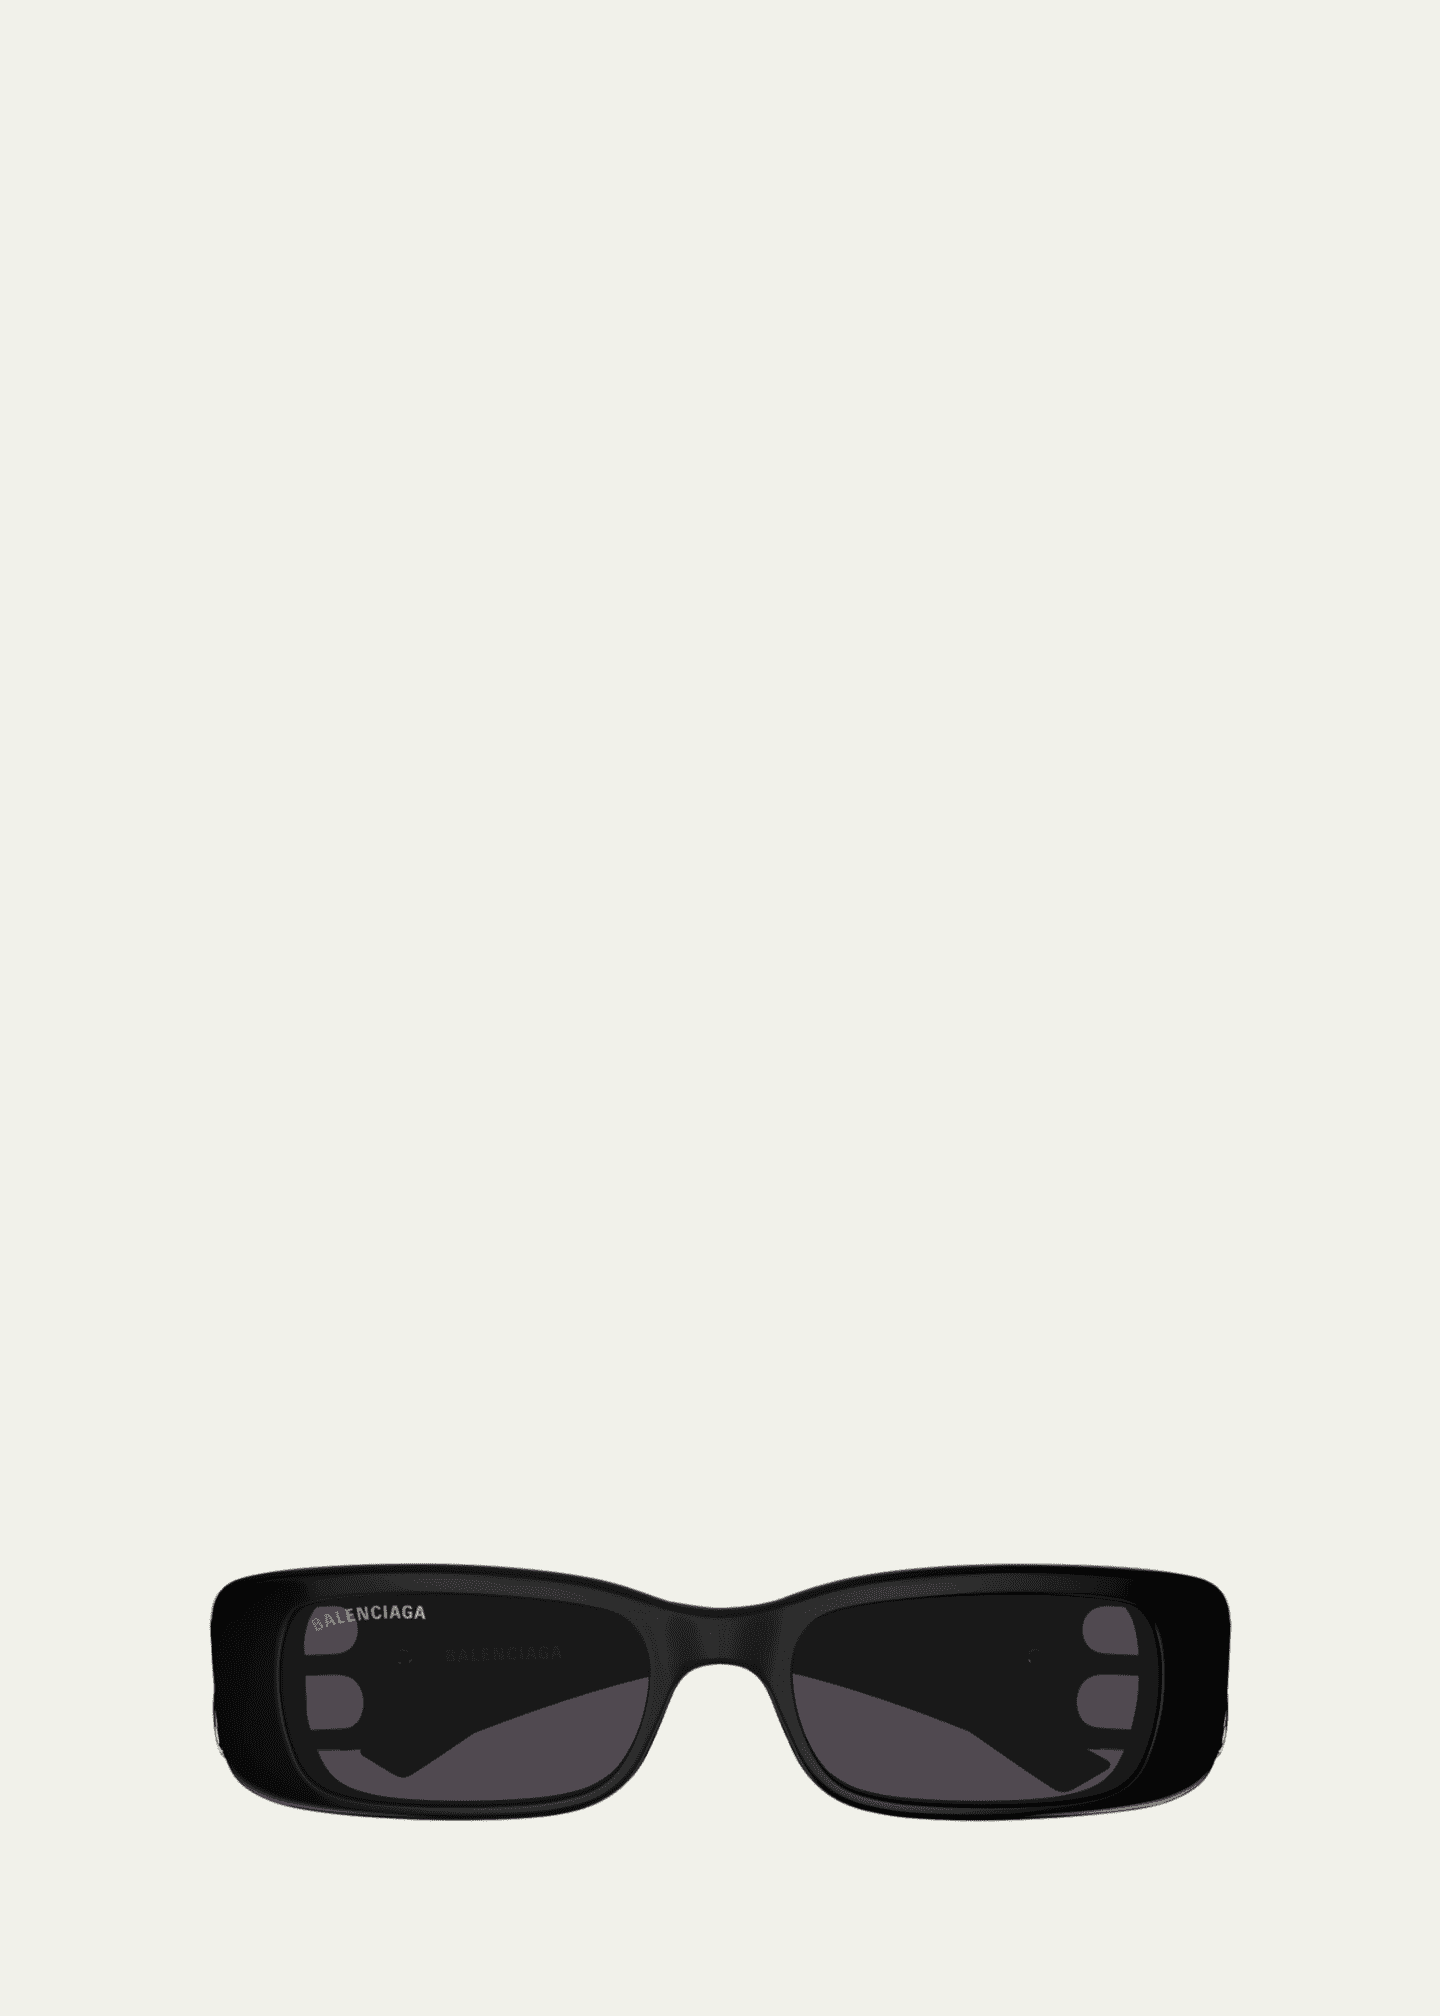 Balenciaga Men's 51mm Rectangular Sunglasses - Black One-Size